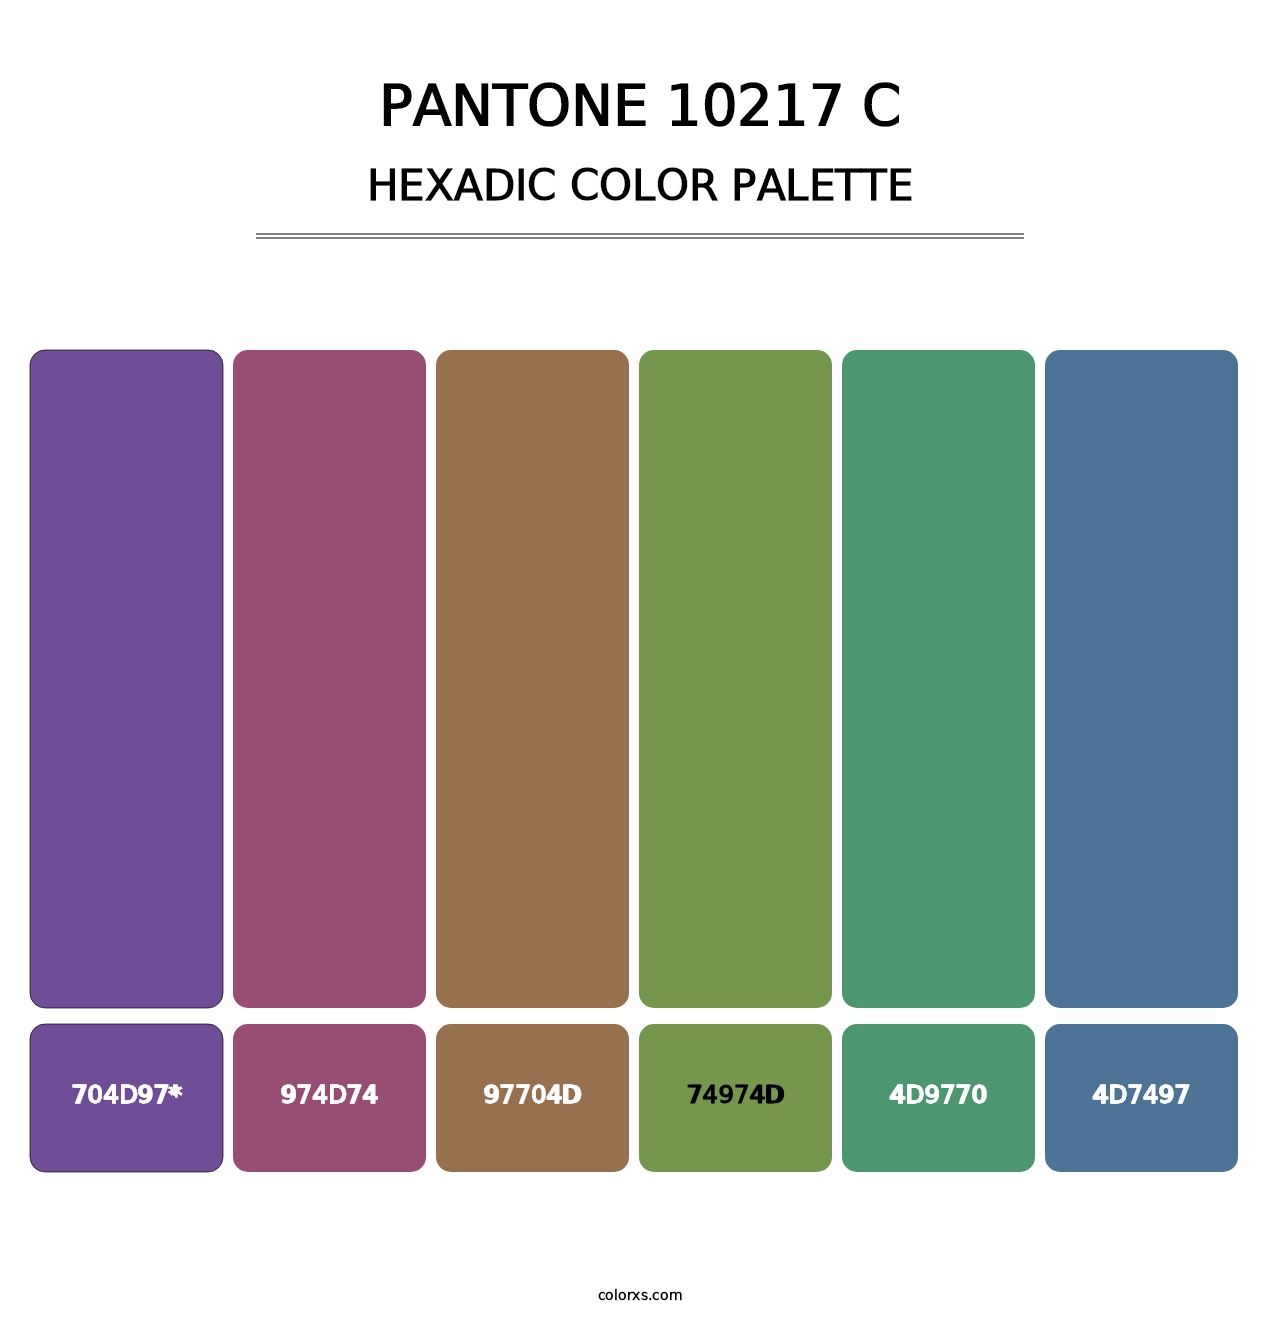 PANTONE 10217 C - Hexadic Color Palette